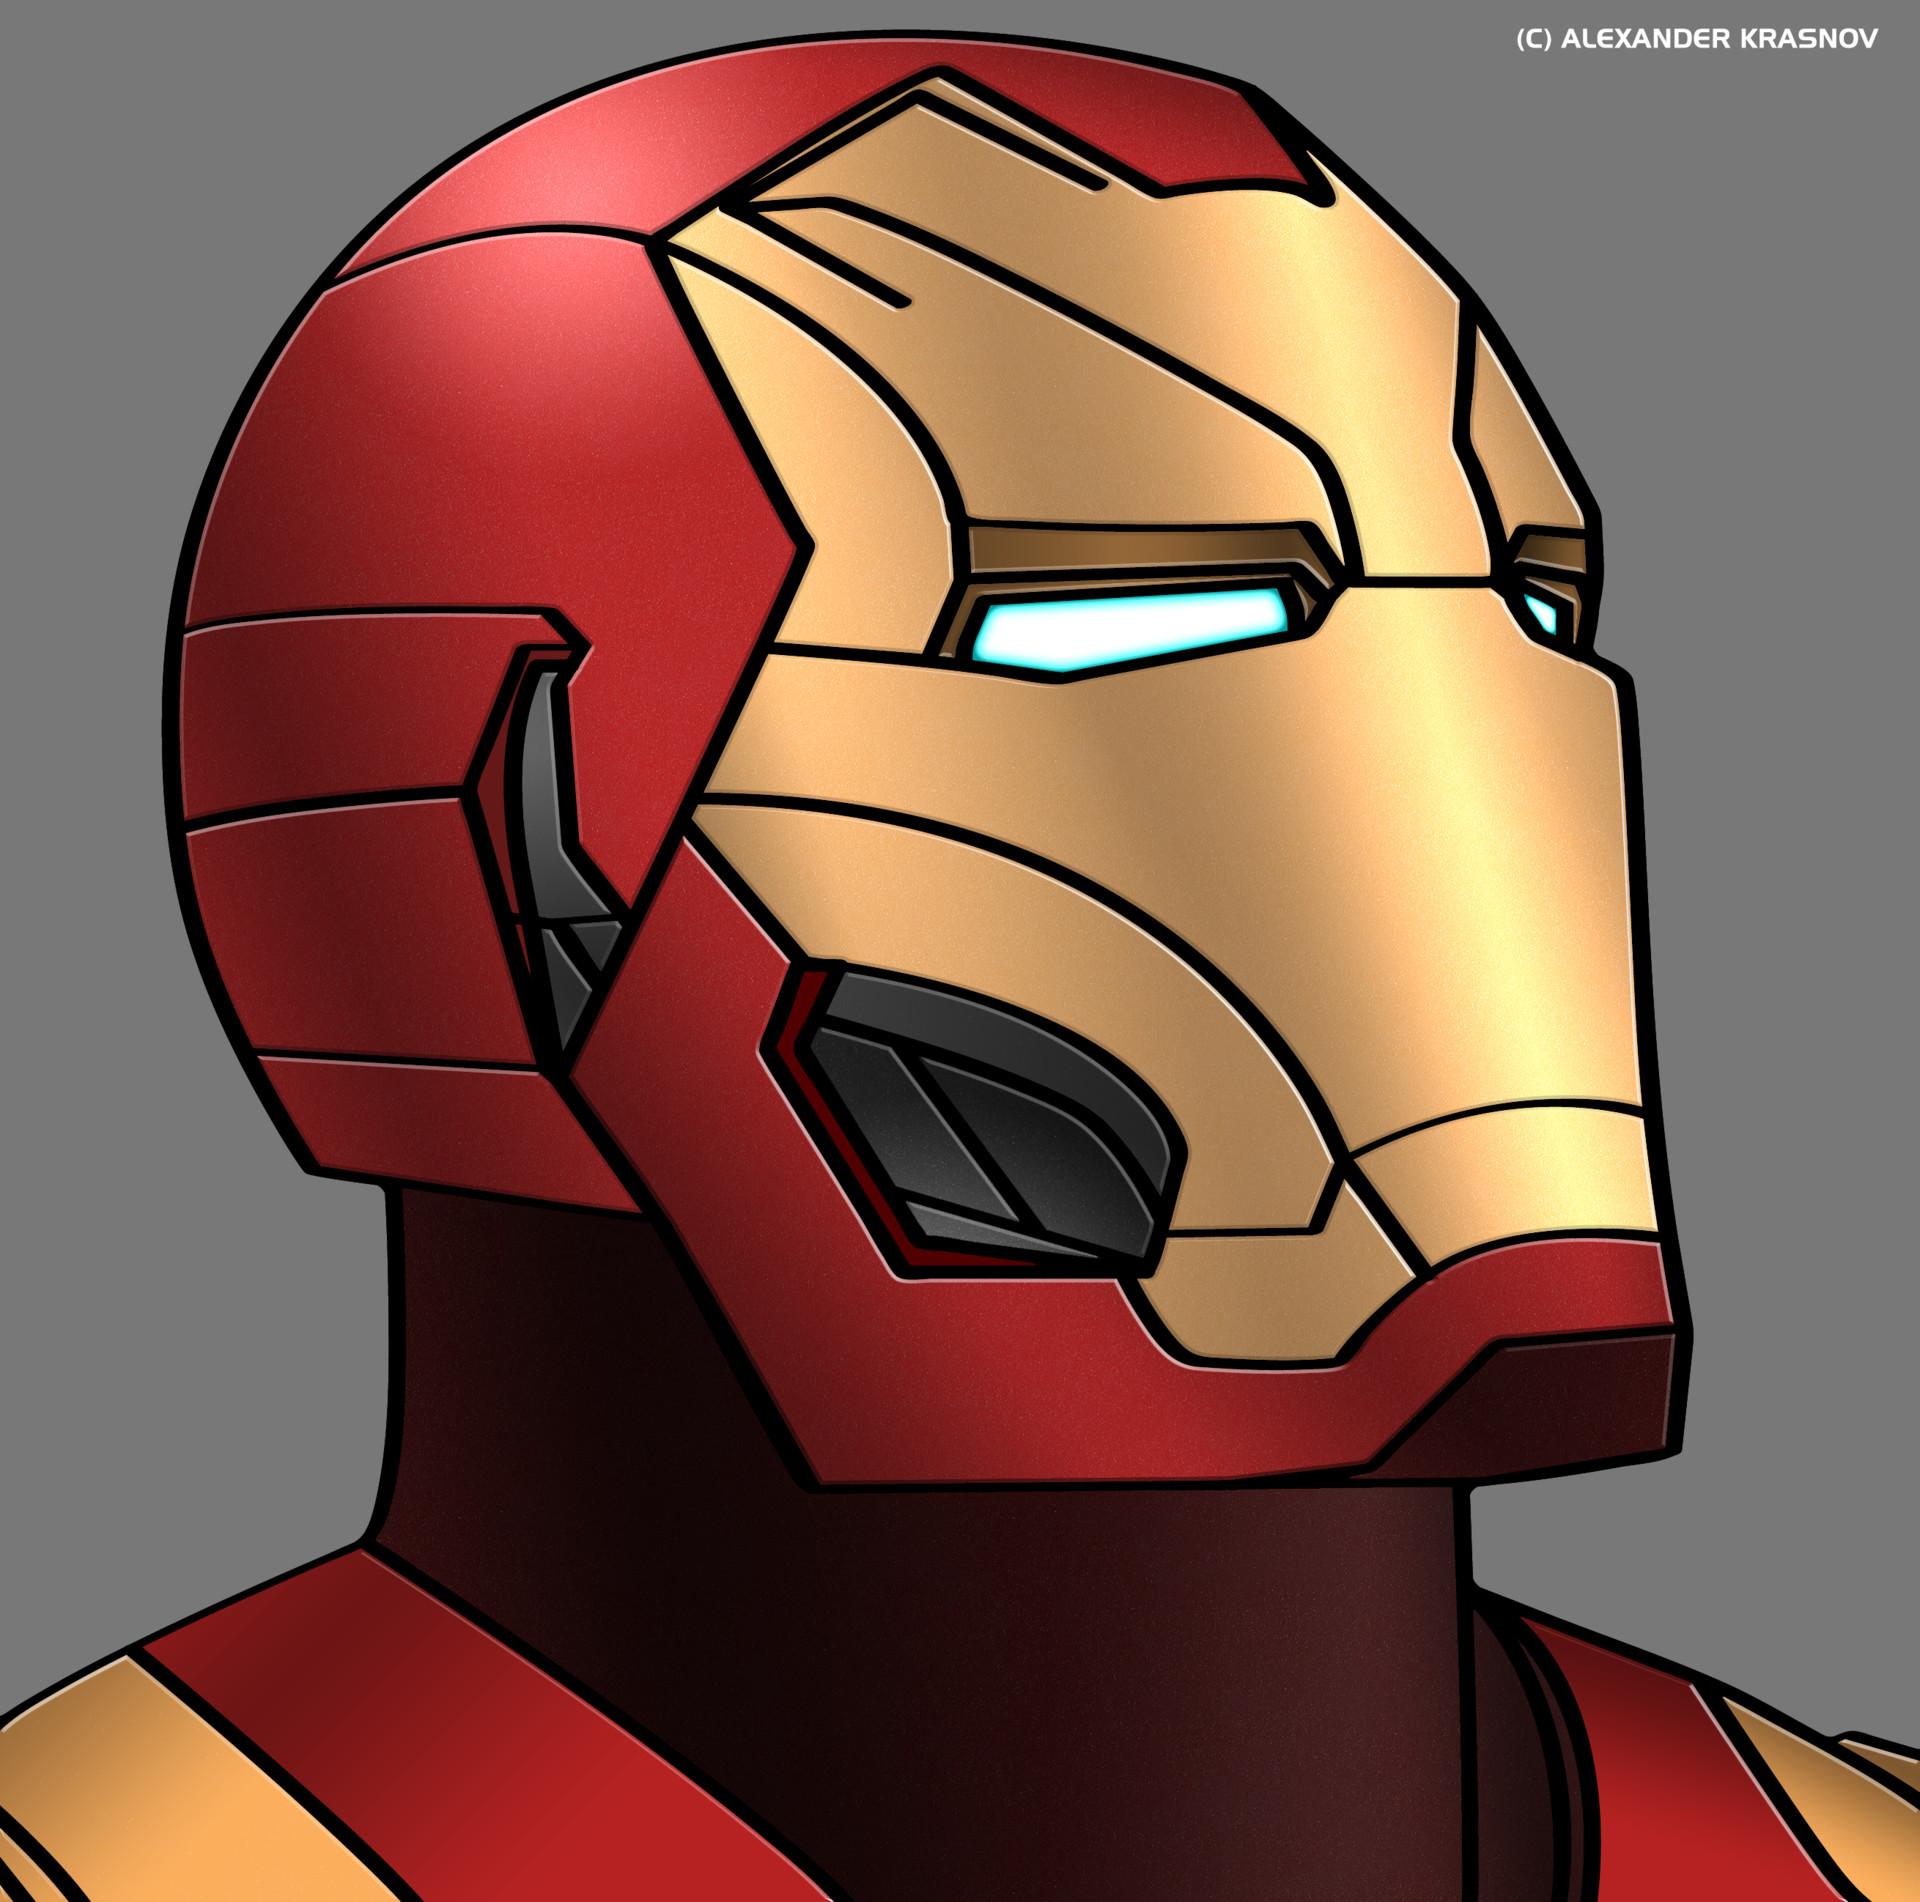 iron man vector